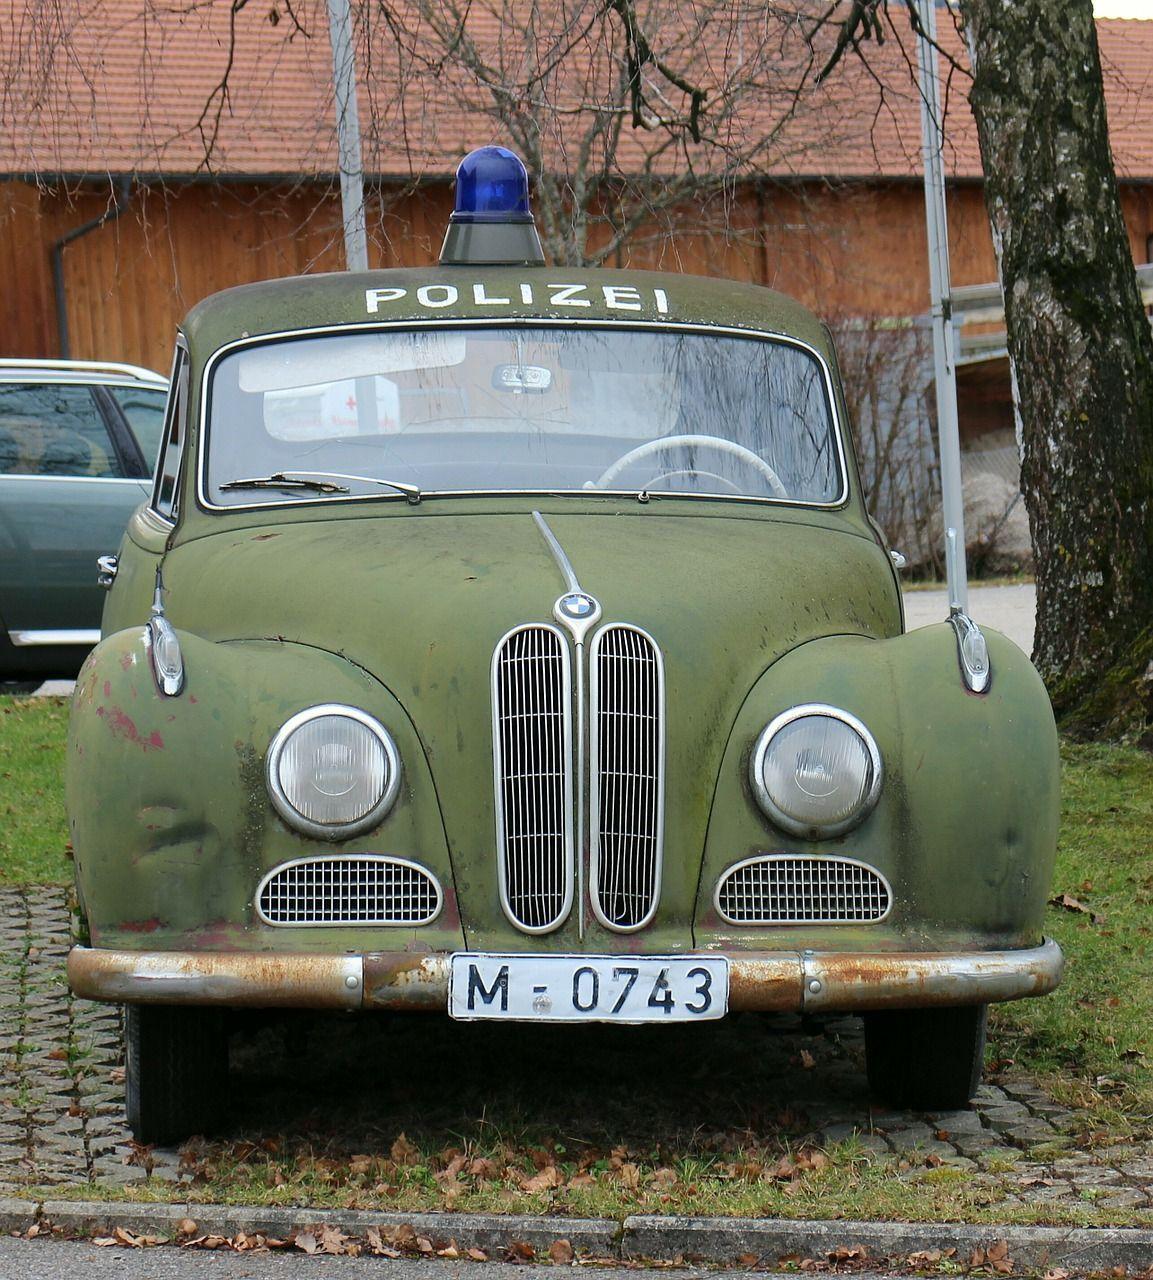 Old German Car Logo - Old German police car. Photo by Antranias, public domain. B M W